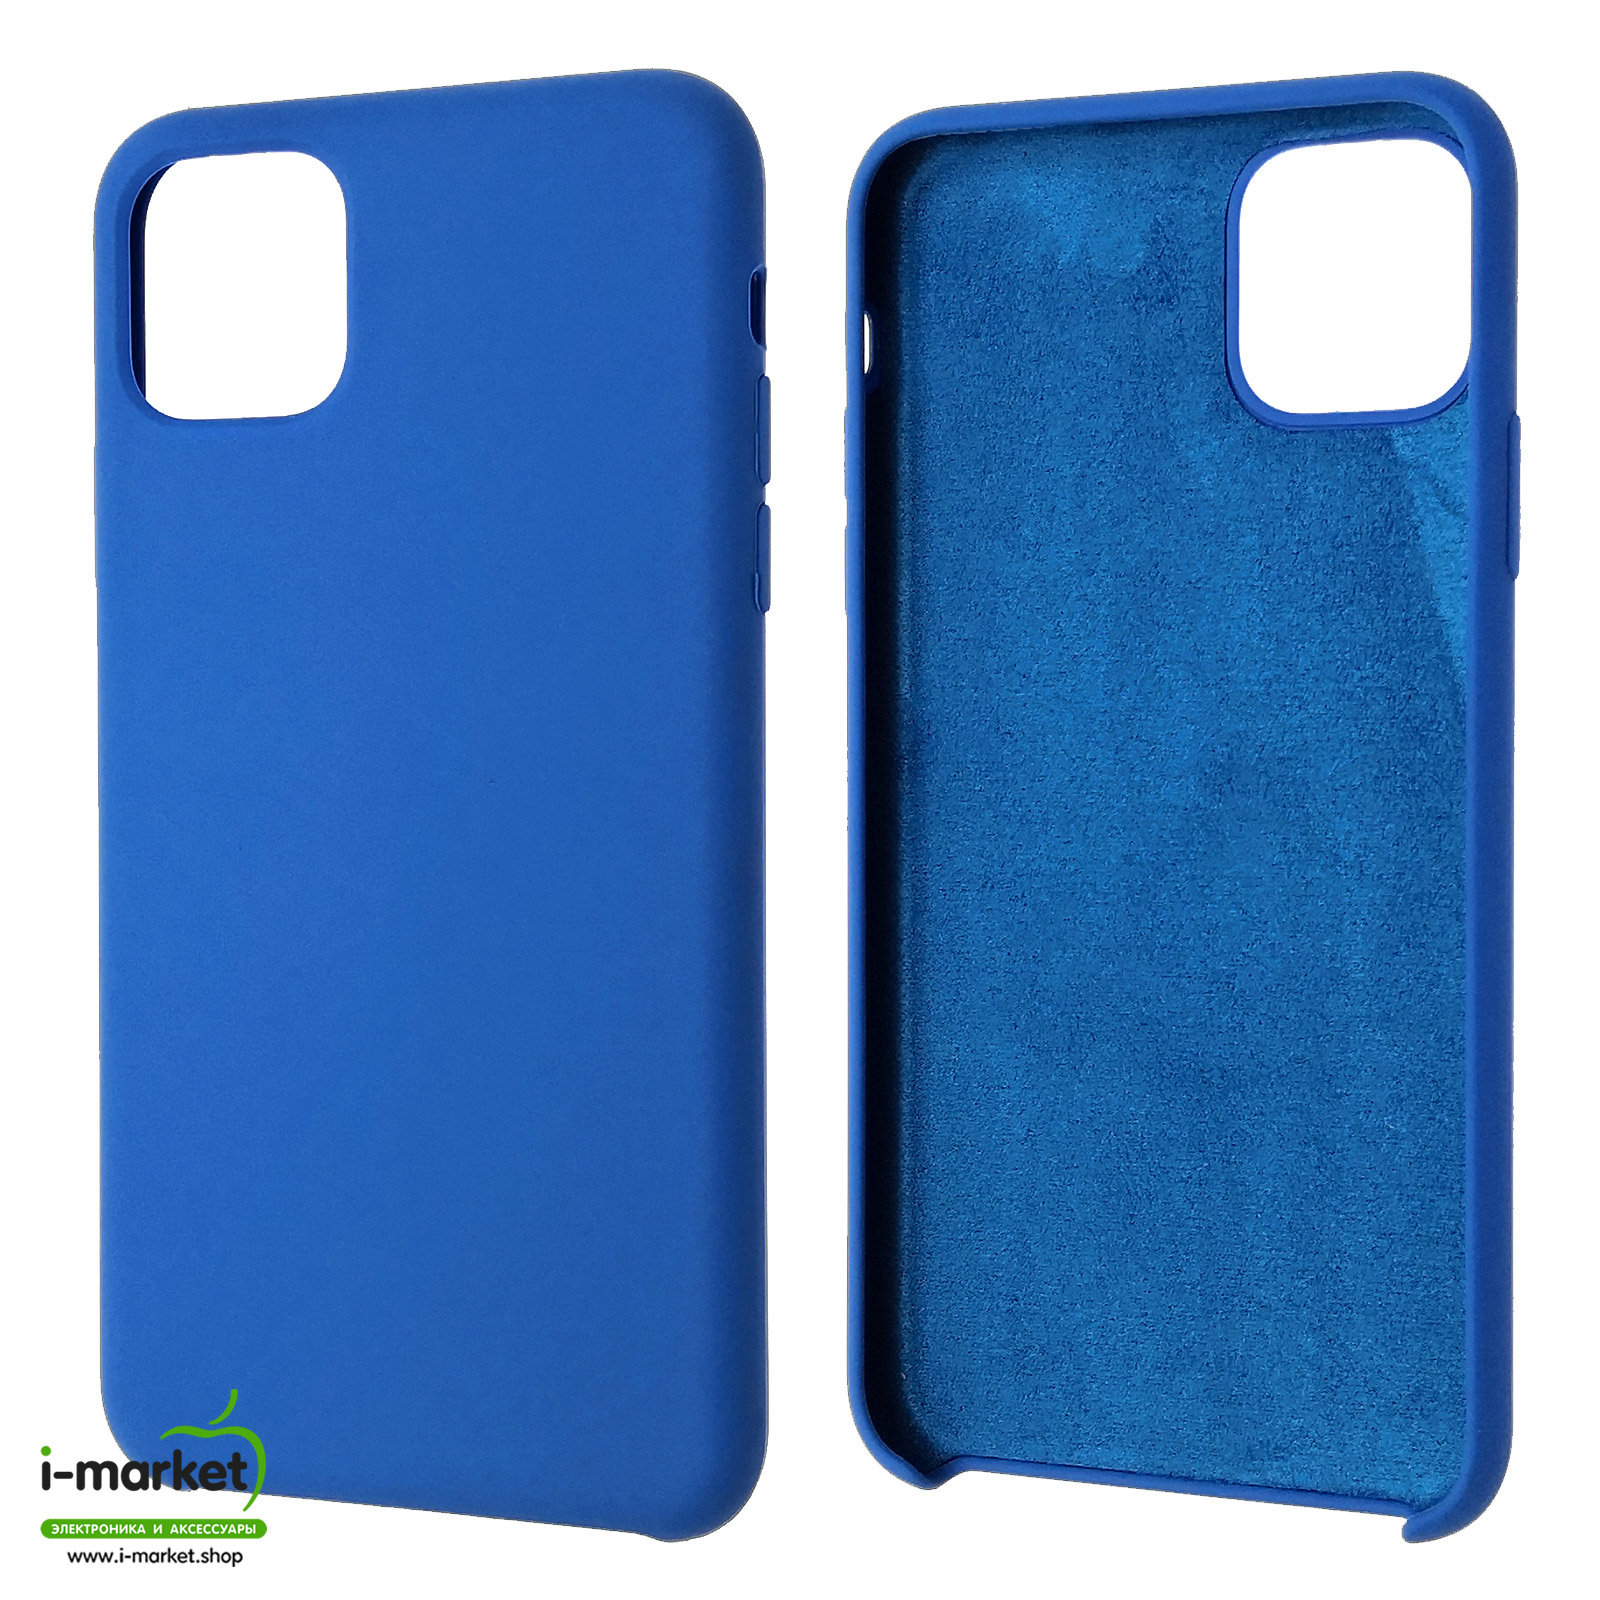 Чехол накладка Silicon Case для APPLE iPhone 11 Pro MAX 2019, силикон, бархат, цвет ярко синий